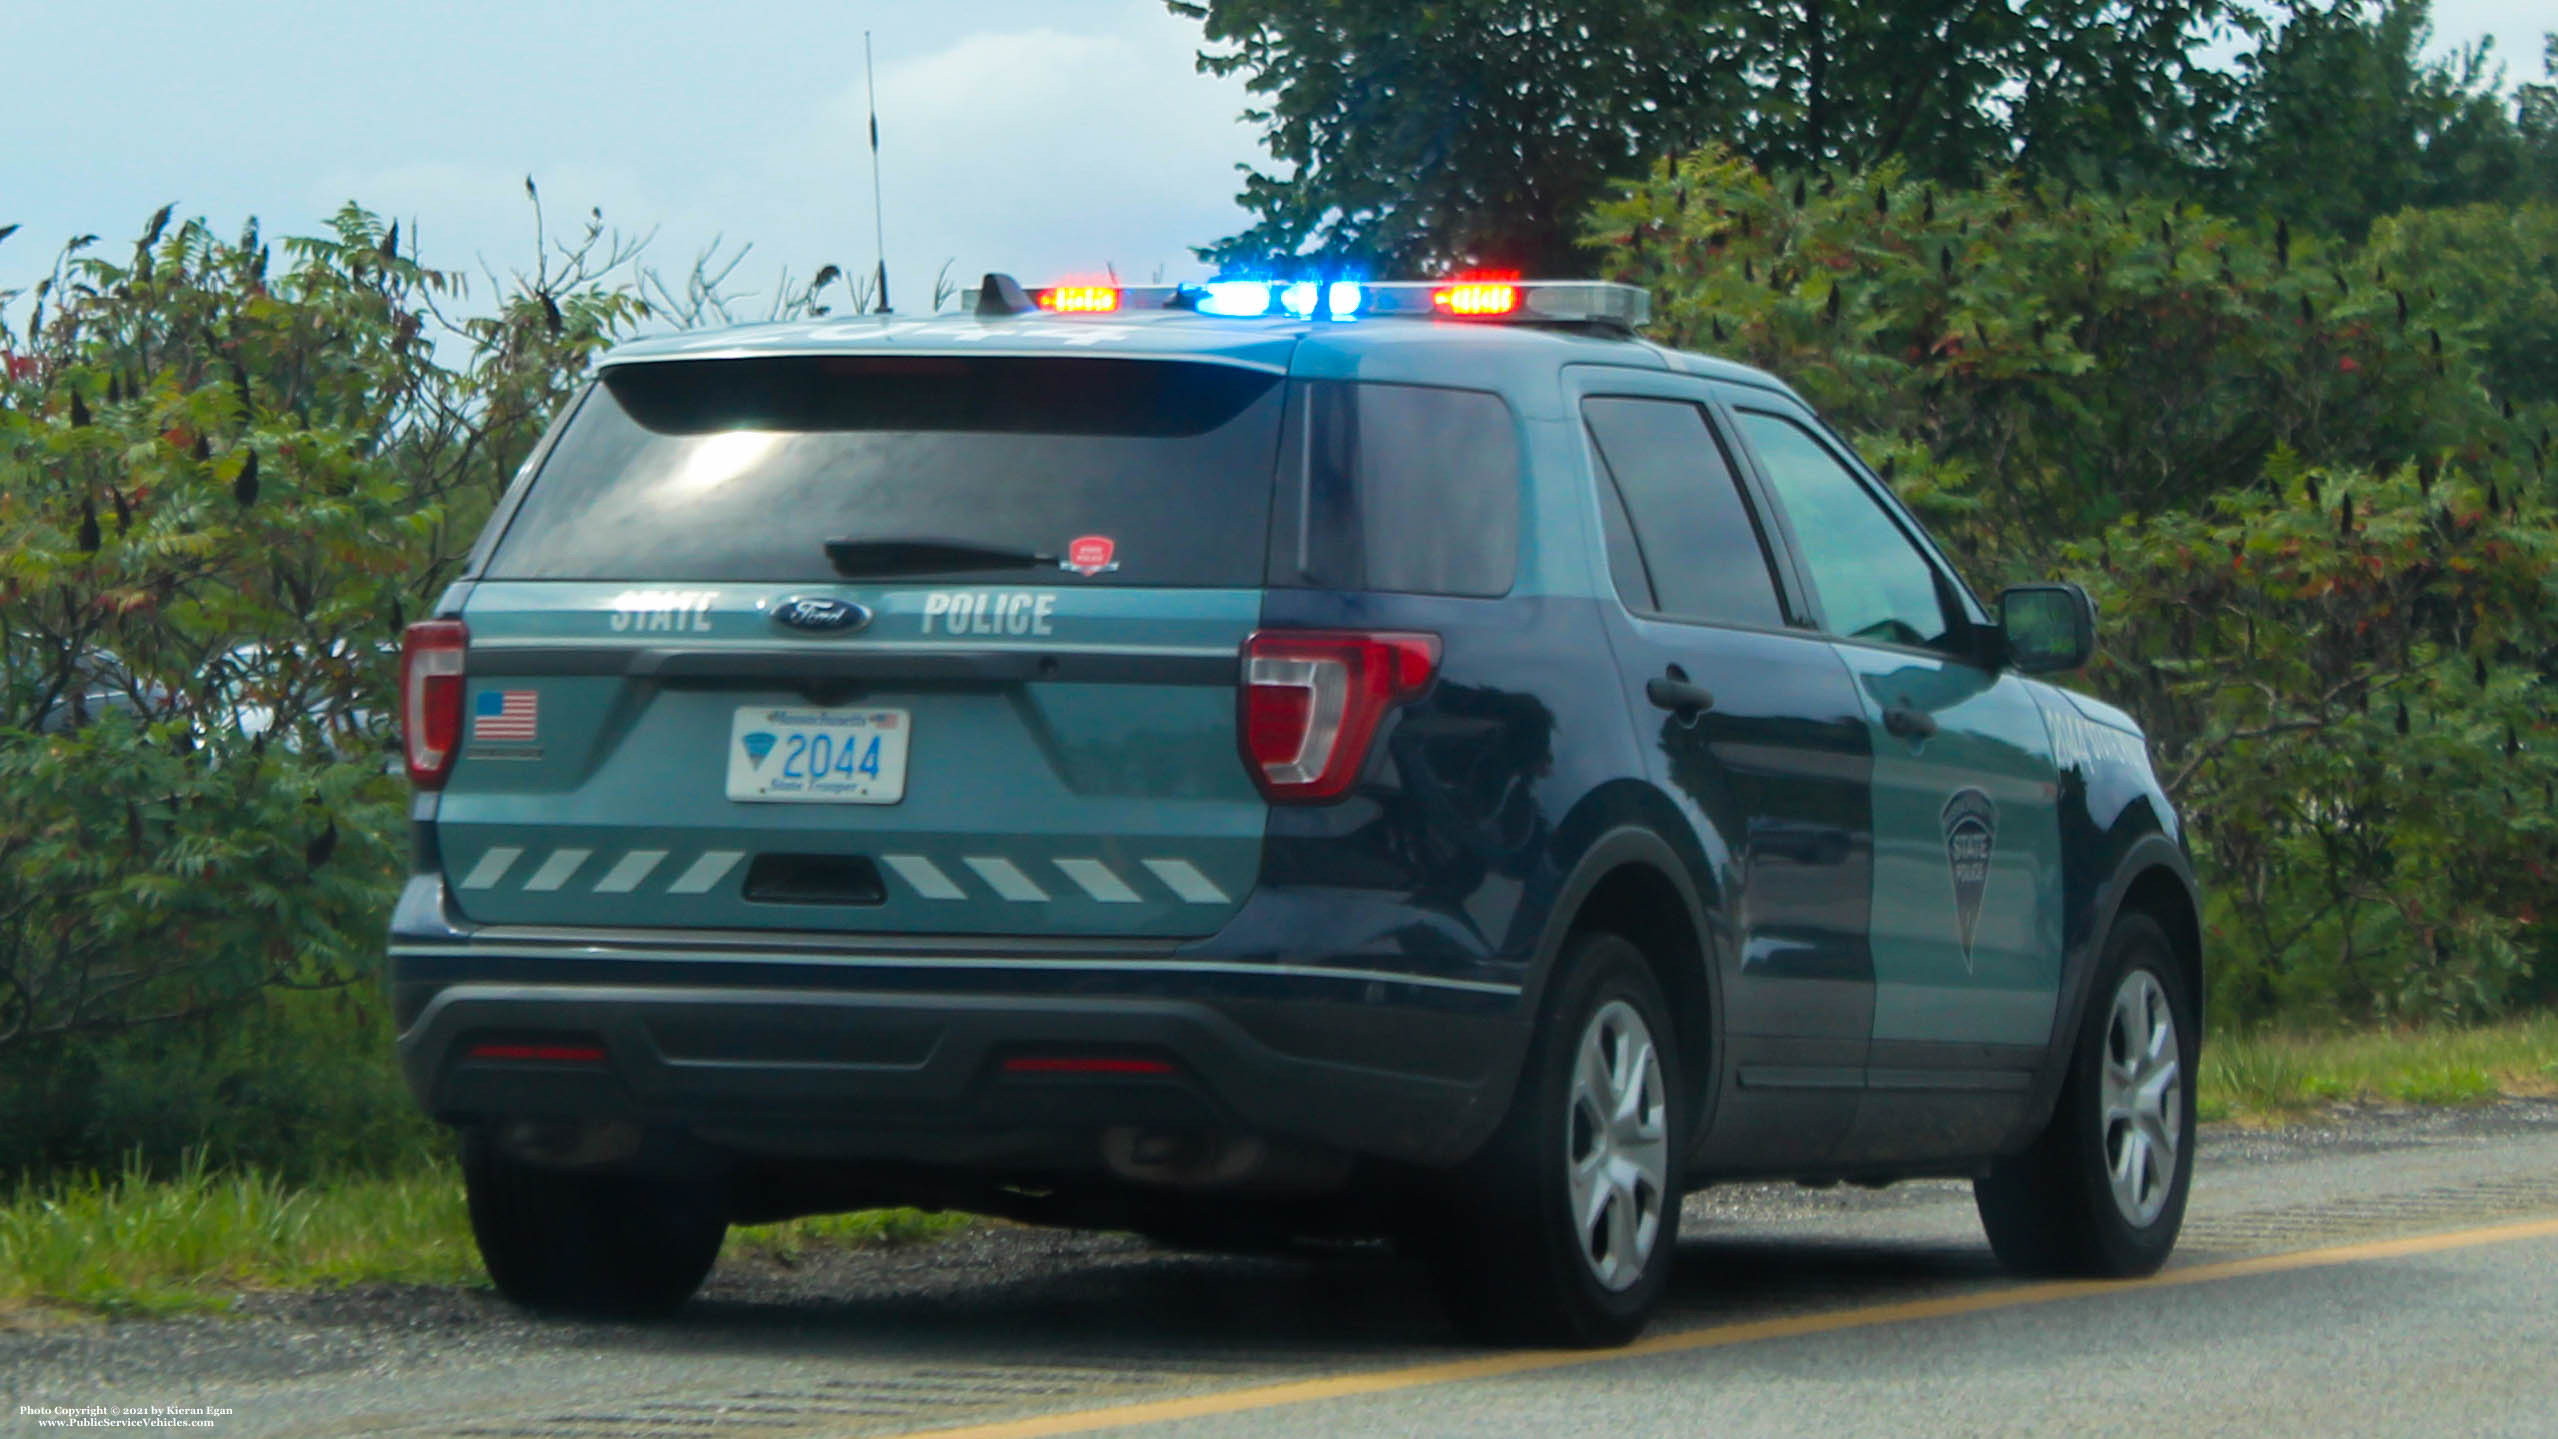 A photo  of Massachusetts State Police
            Cruiser 2044, a 2018 Ford Police Interceptor Utility             taken by Kieran Egan